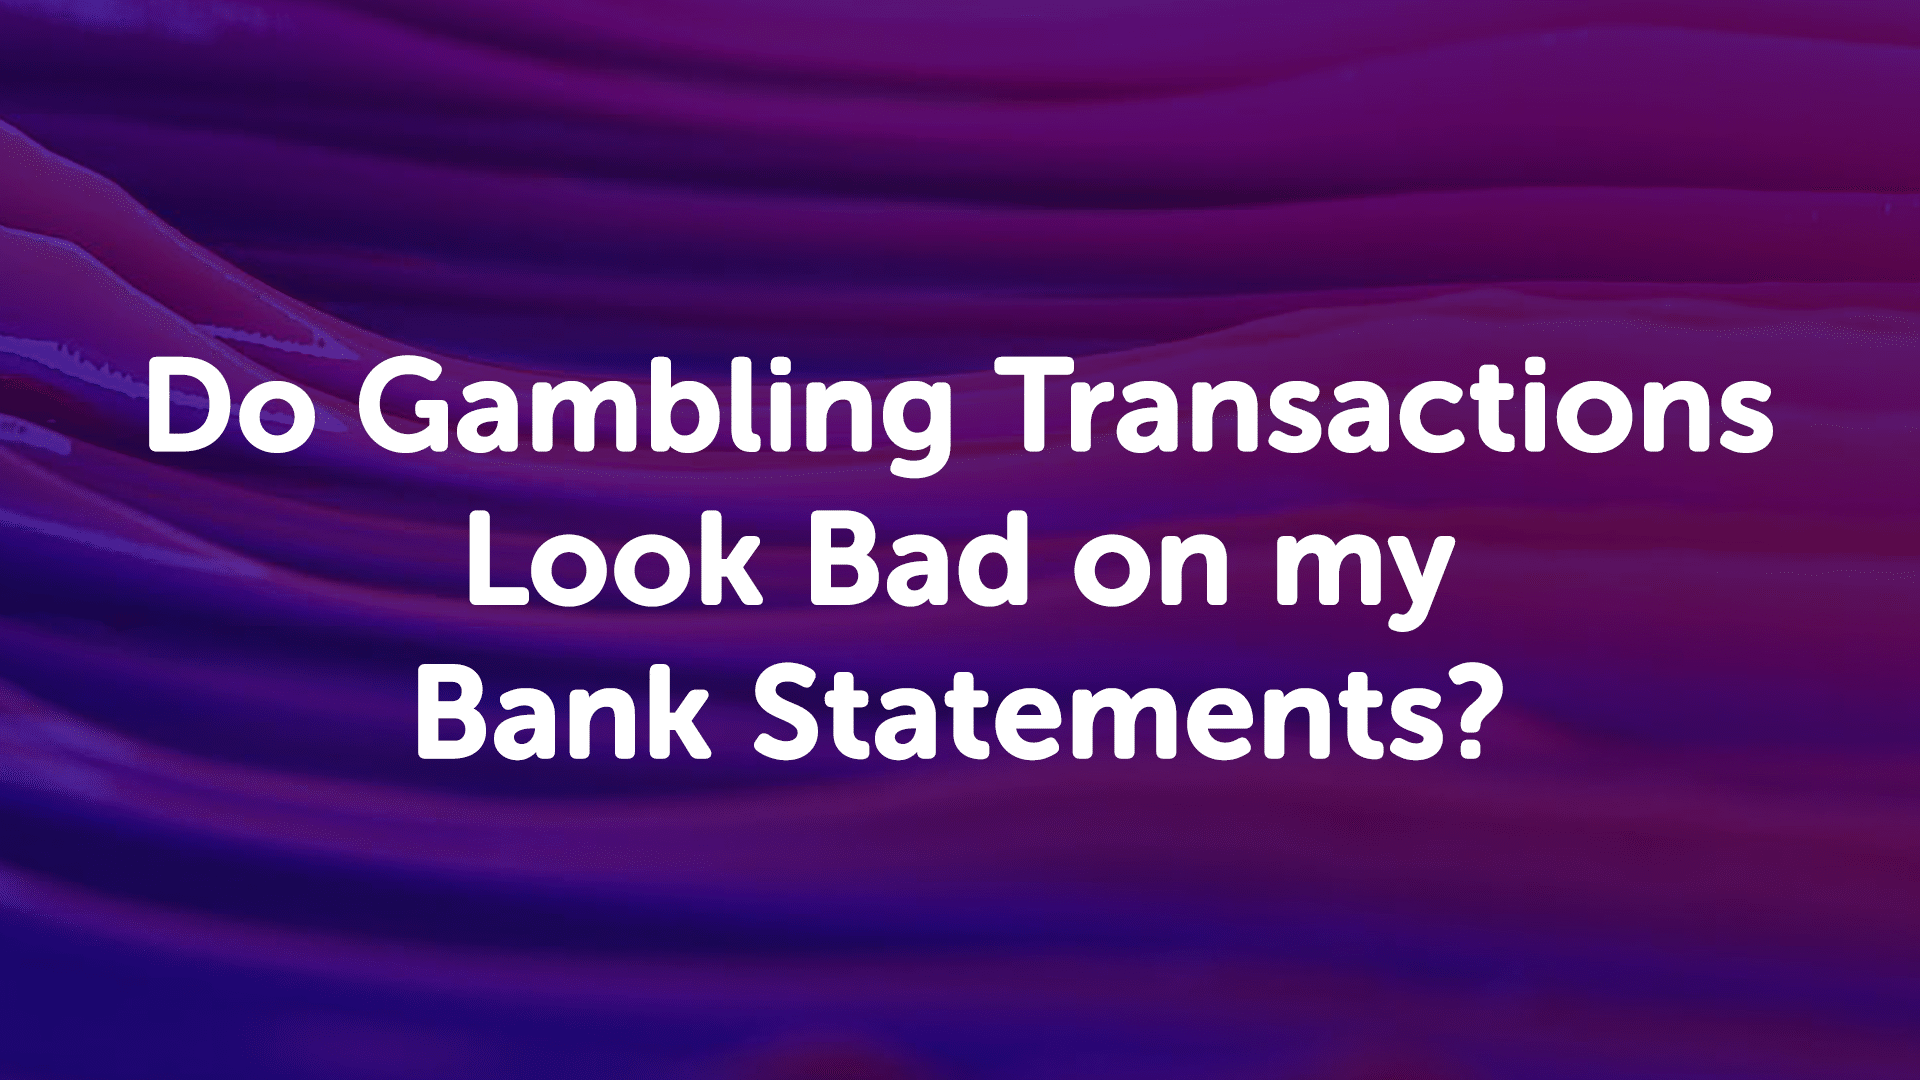 Gambling Transactions on Bank Statements